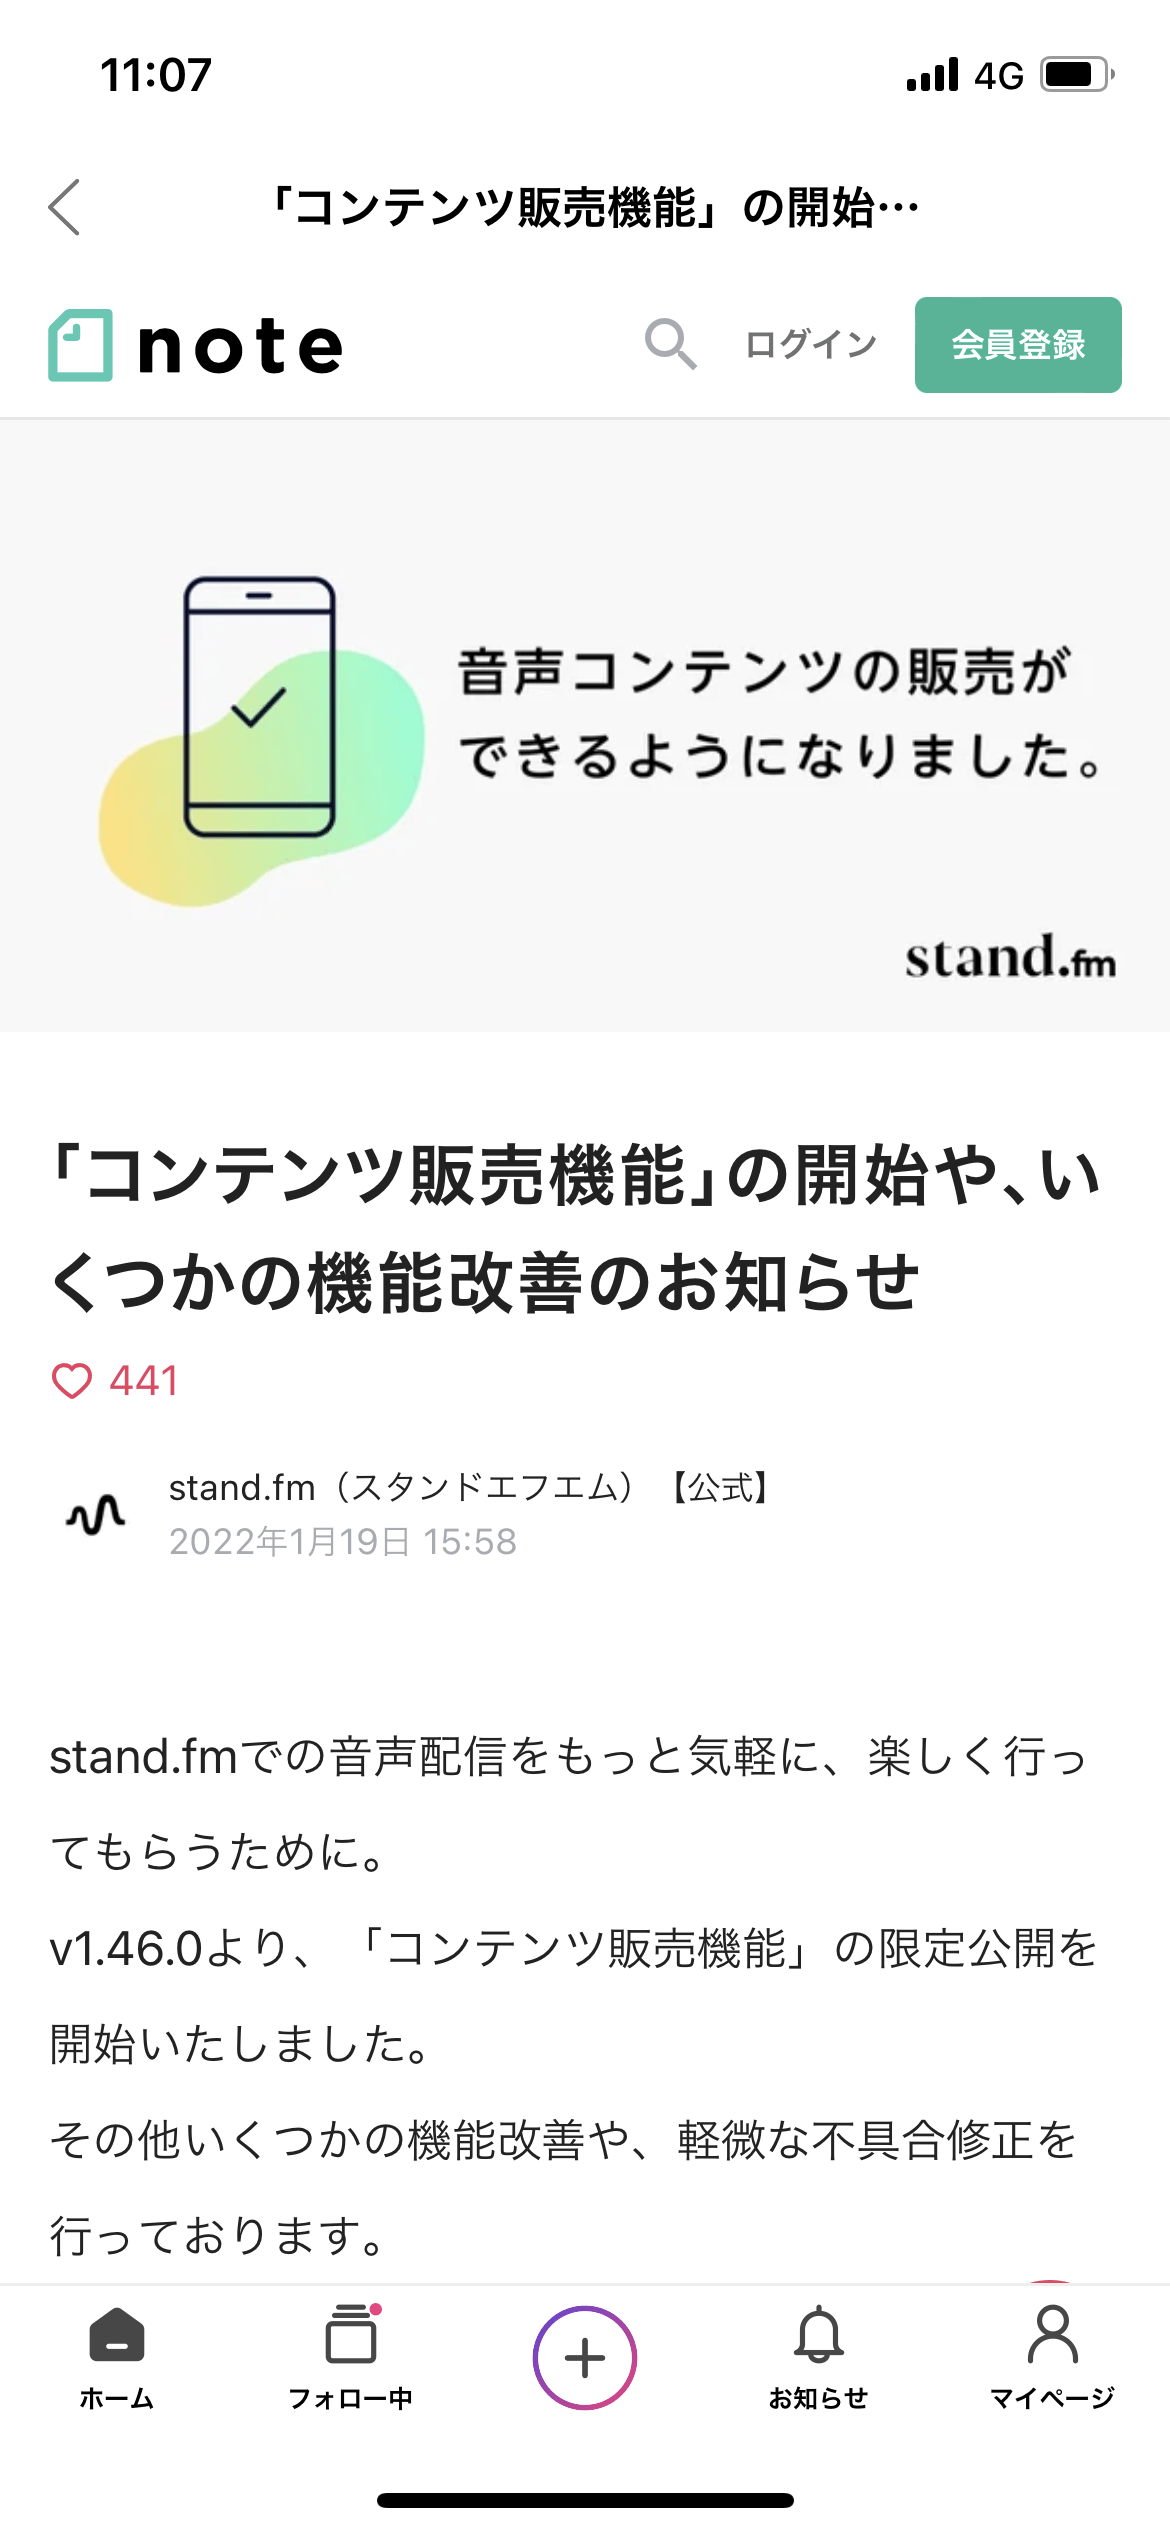 stand.fm ホーム screen